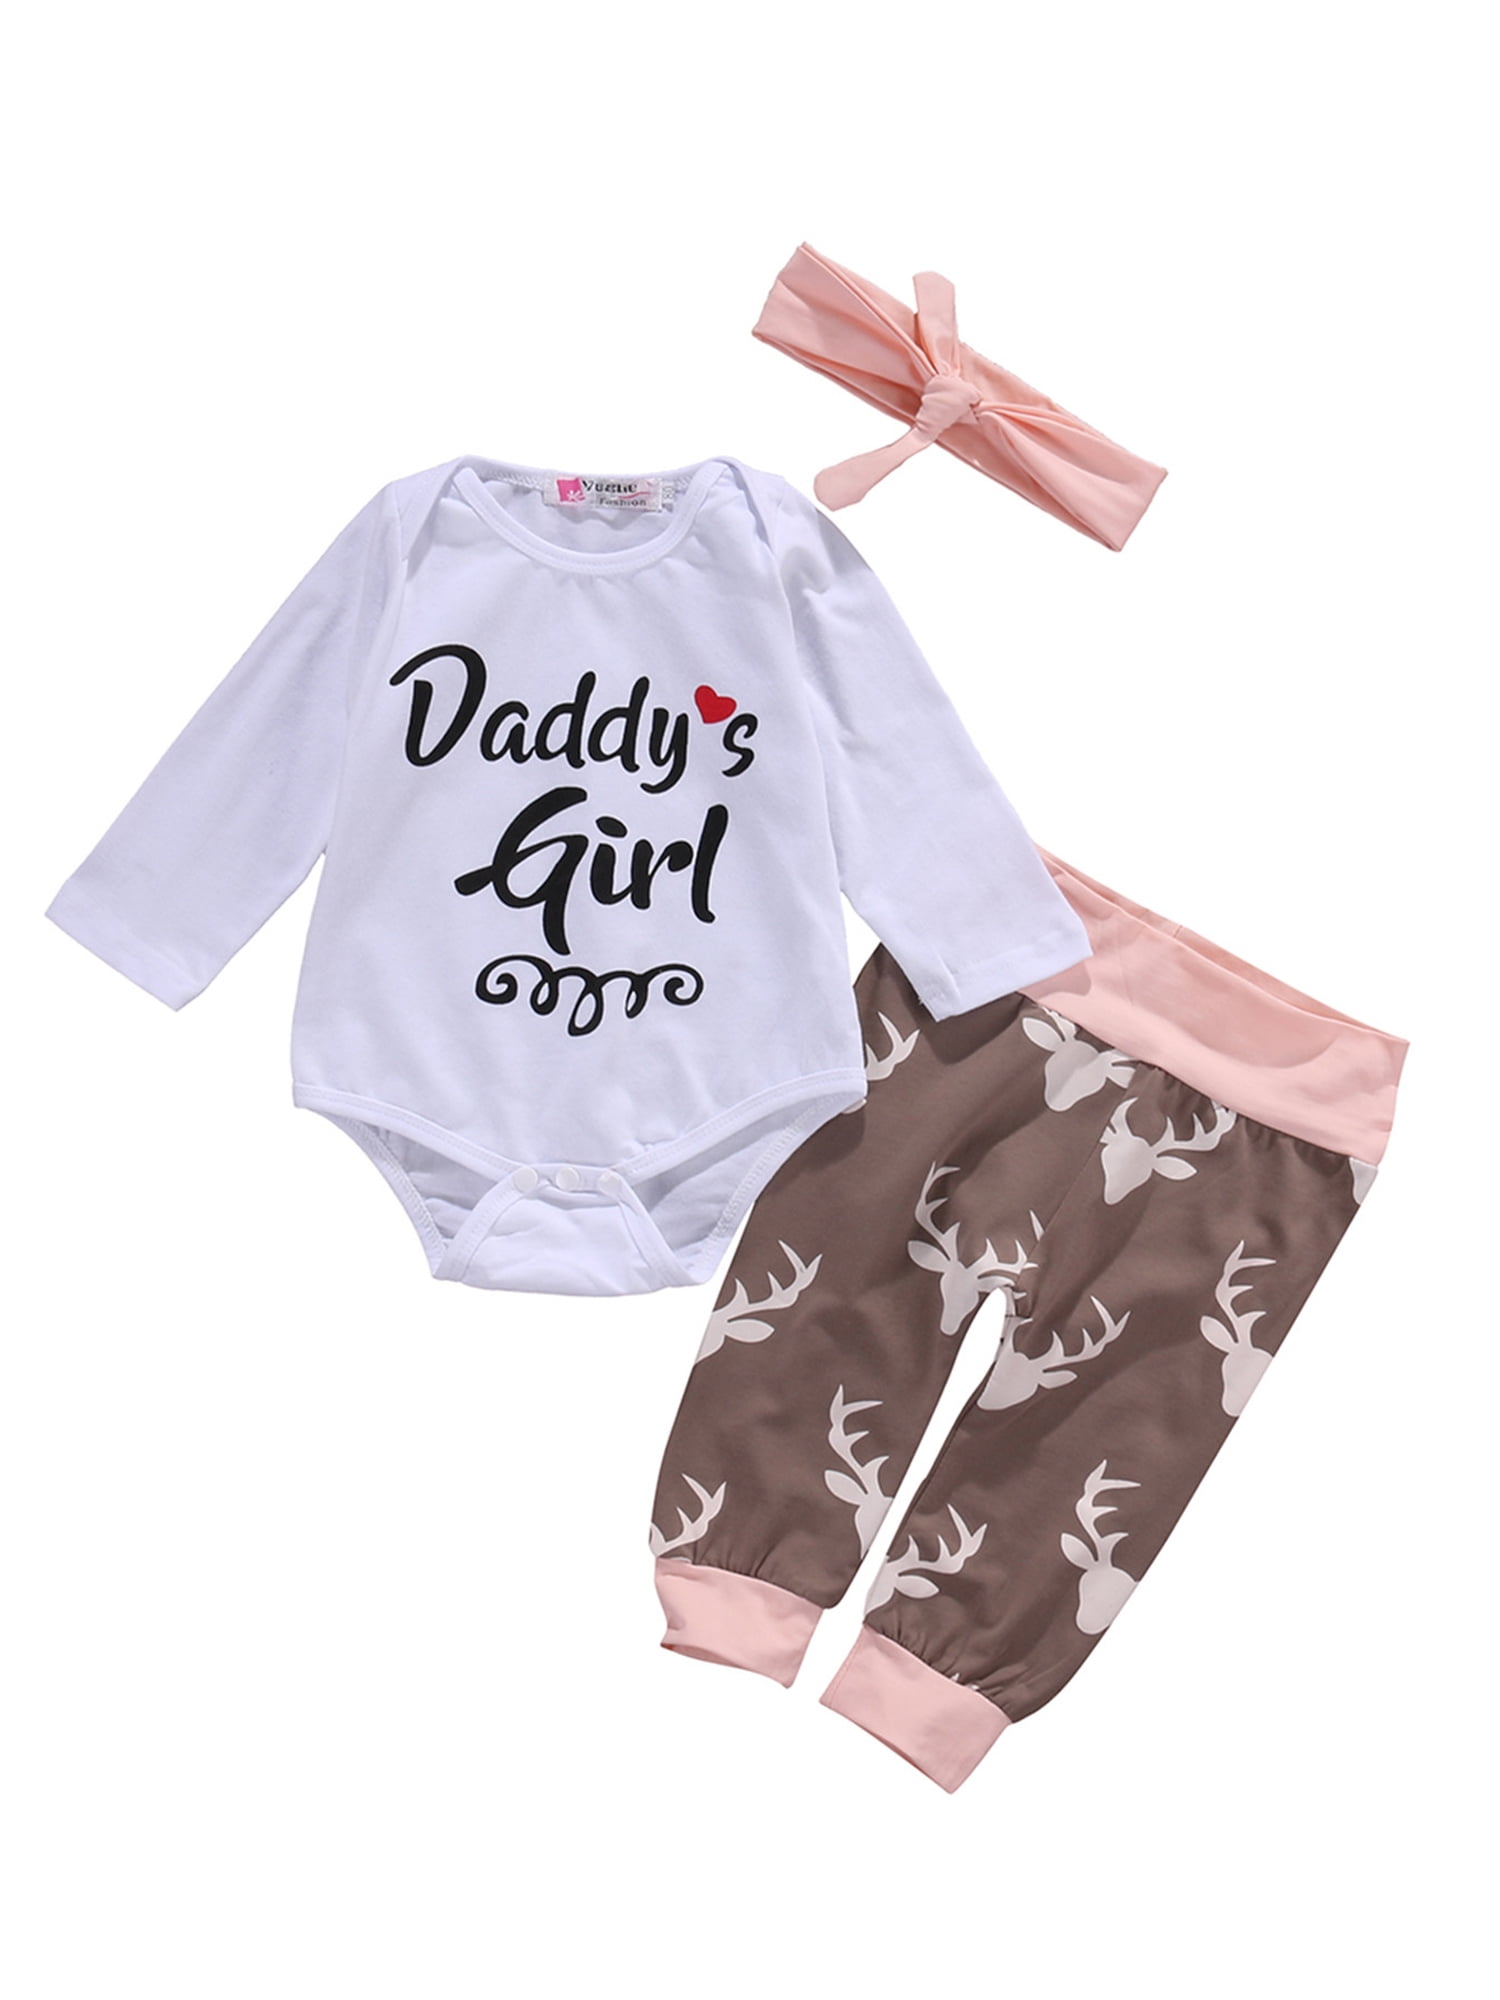 6-12M, Black Cute 3pcs Newborn Baby Boy Clothes Deer Tops T-shirt+Pants Leggings 3pcs Outfits Set 